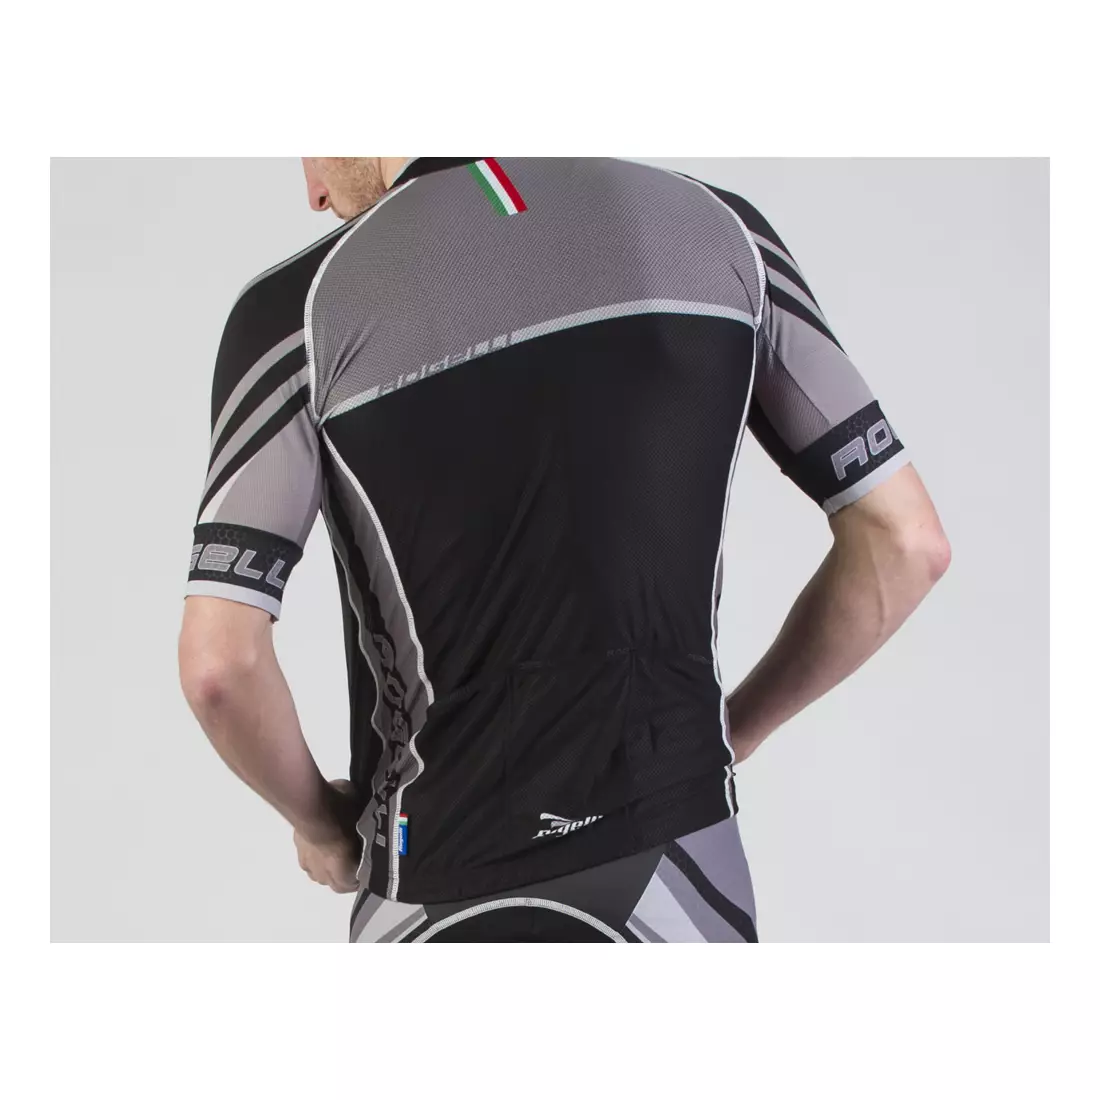 ROGELLI BIKE 001.318 ANDRANO 2.0 cycling jersey, black-gray-white